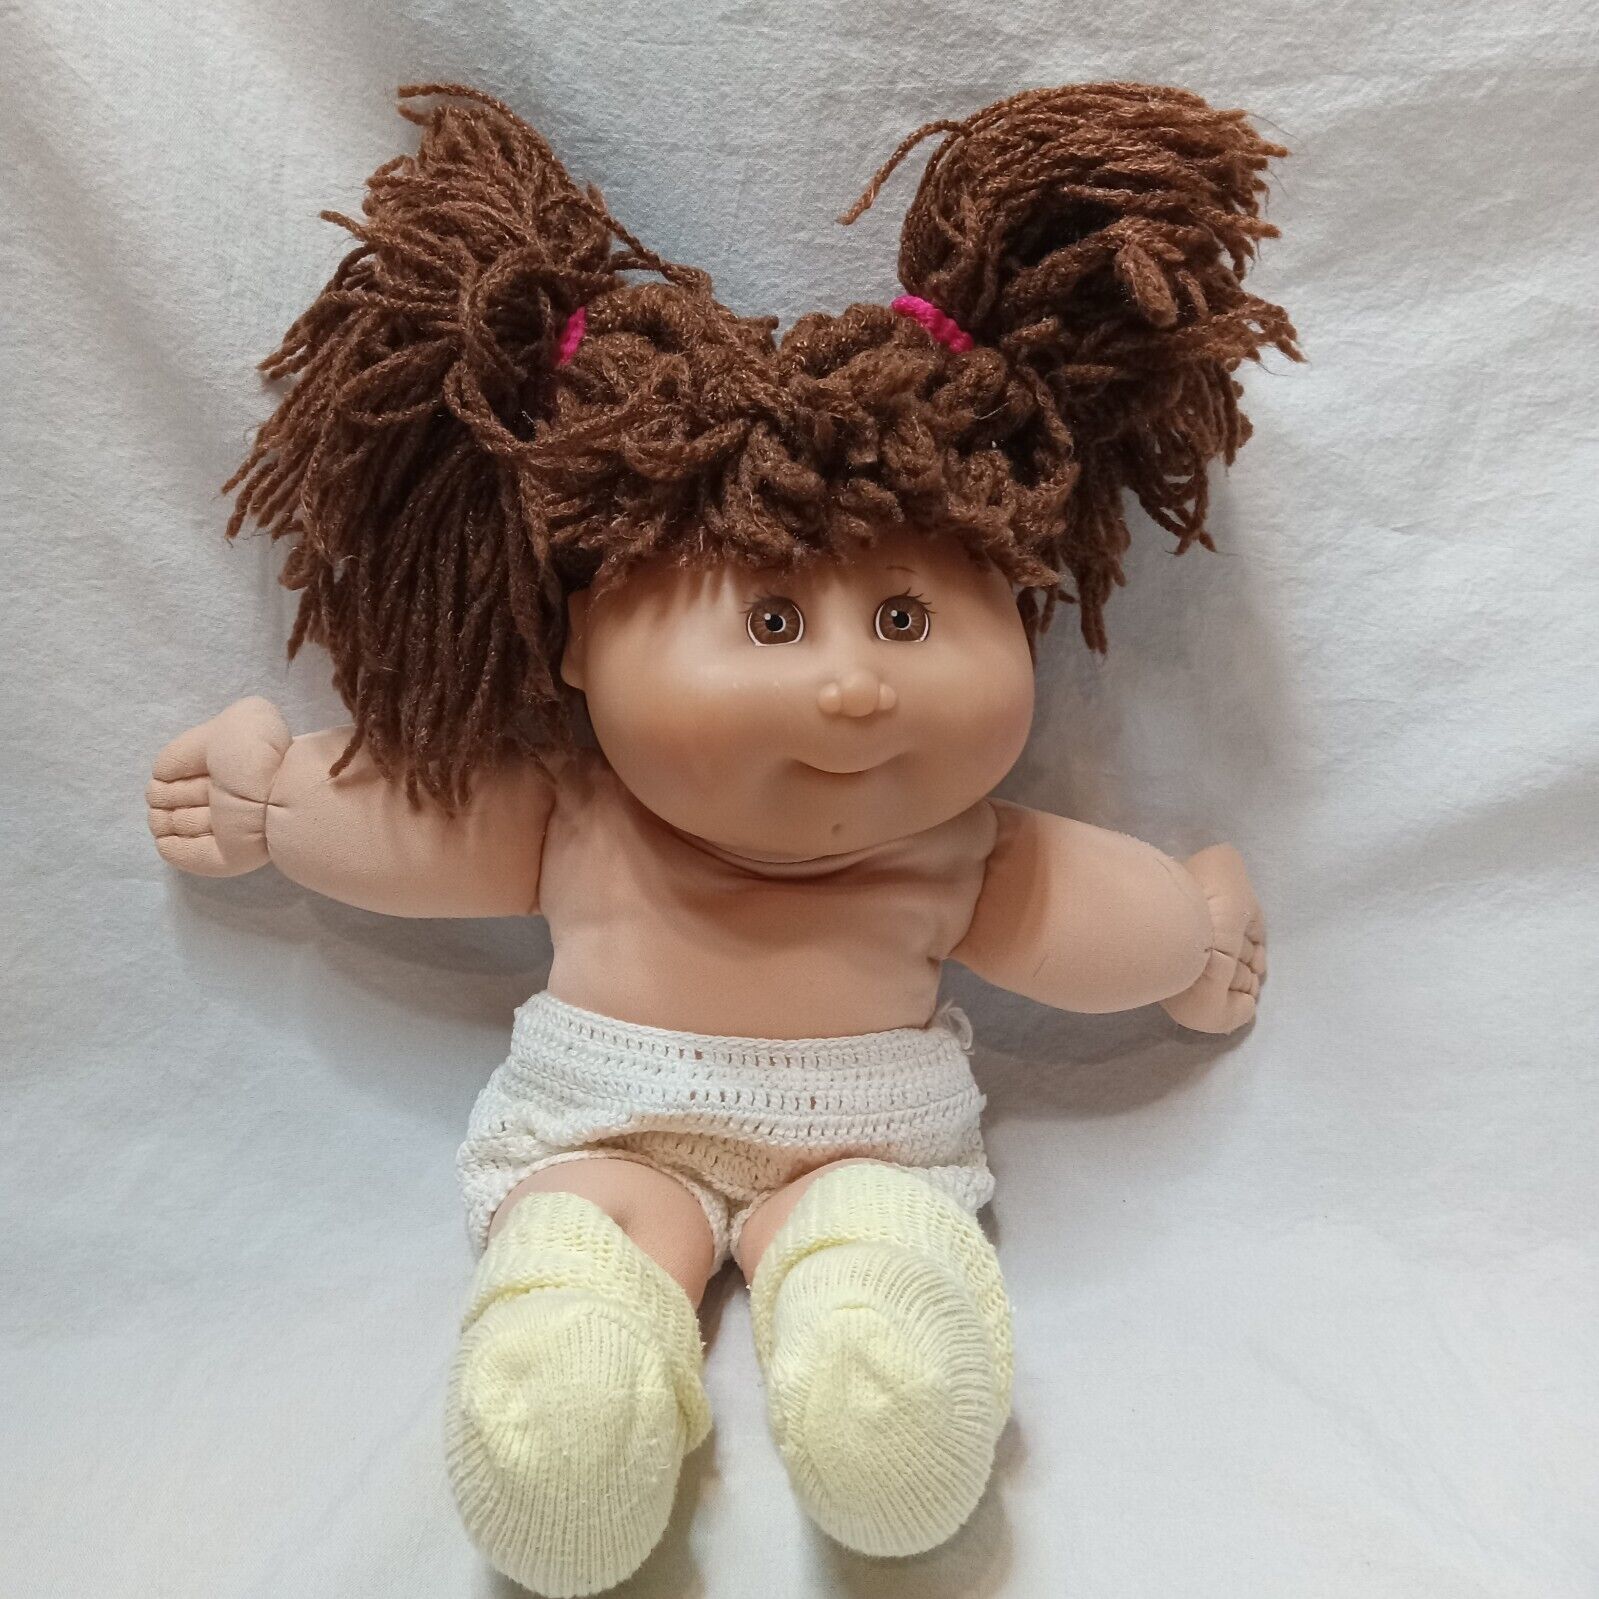 Vintage Mattel Cabbage Patch Kids Brown Hair Girl Doll Brown Eyes 1988 - $10.29